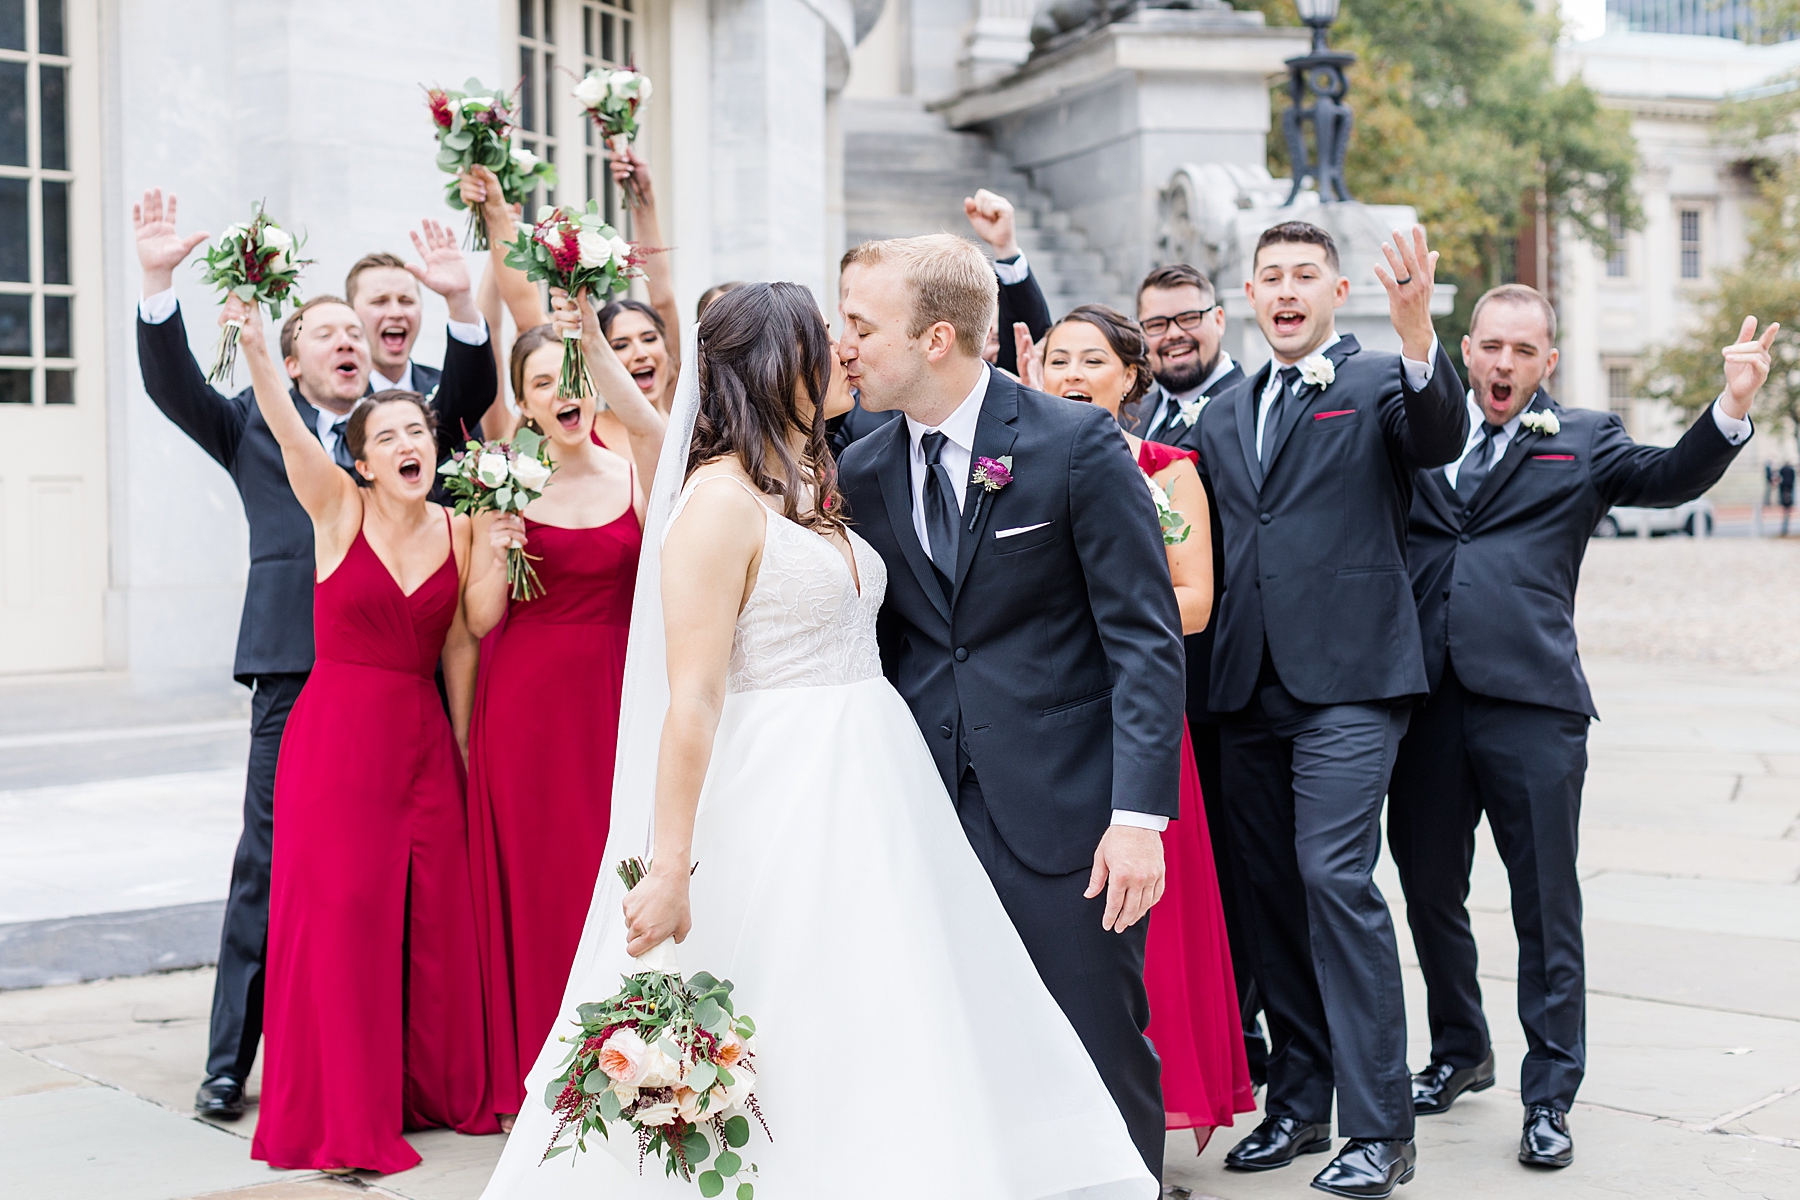 bridesmaids and groomsmen cheer as bride and groom kiss